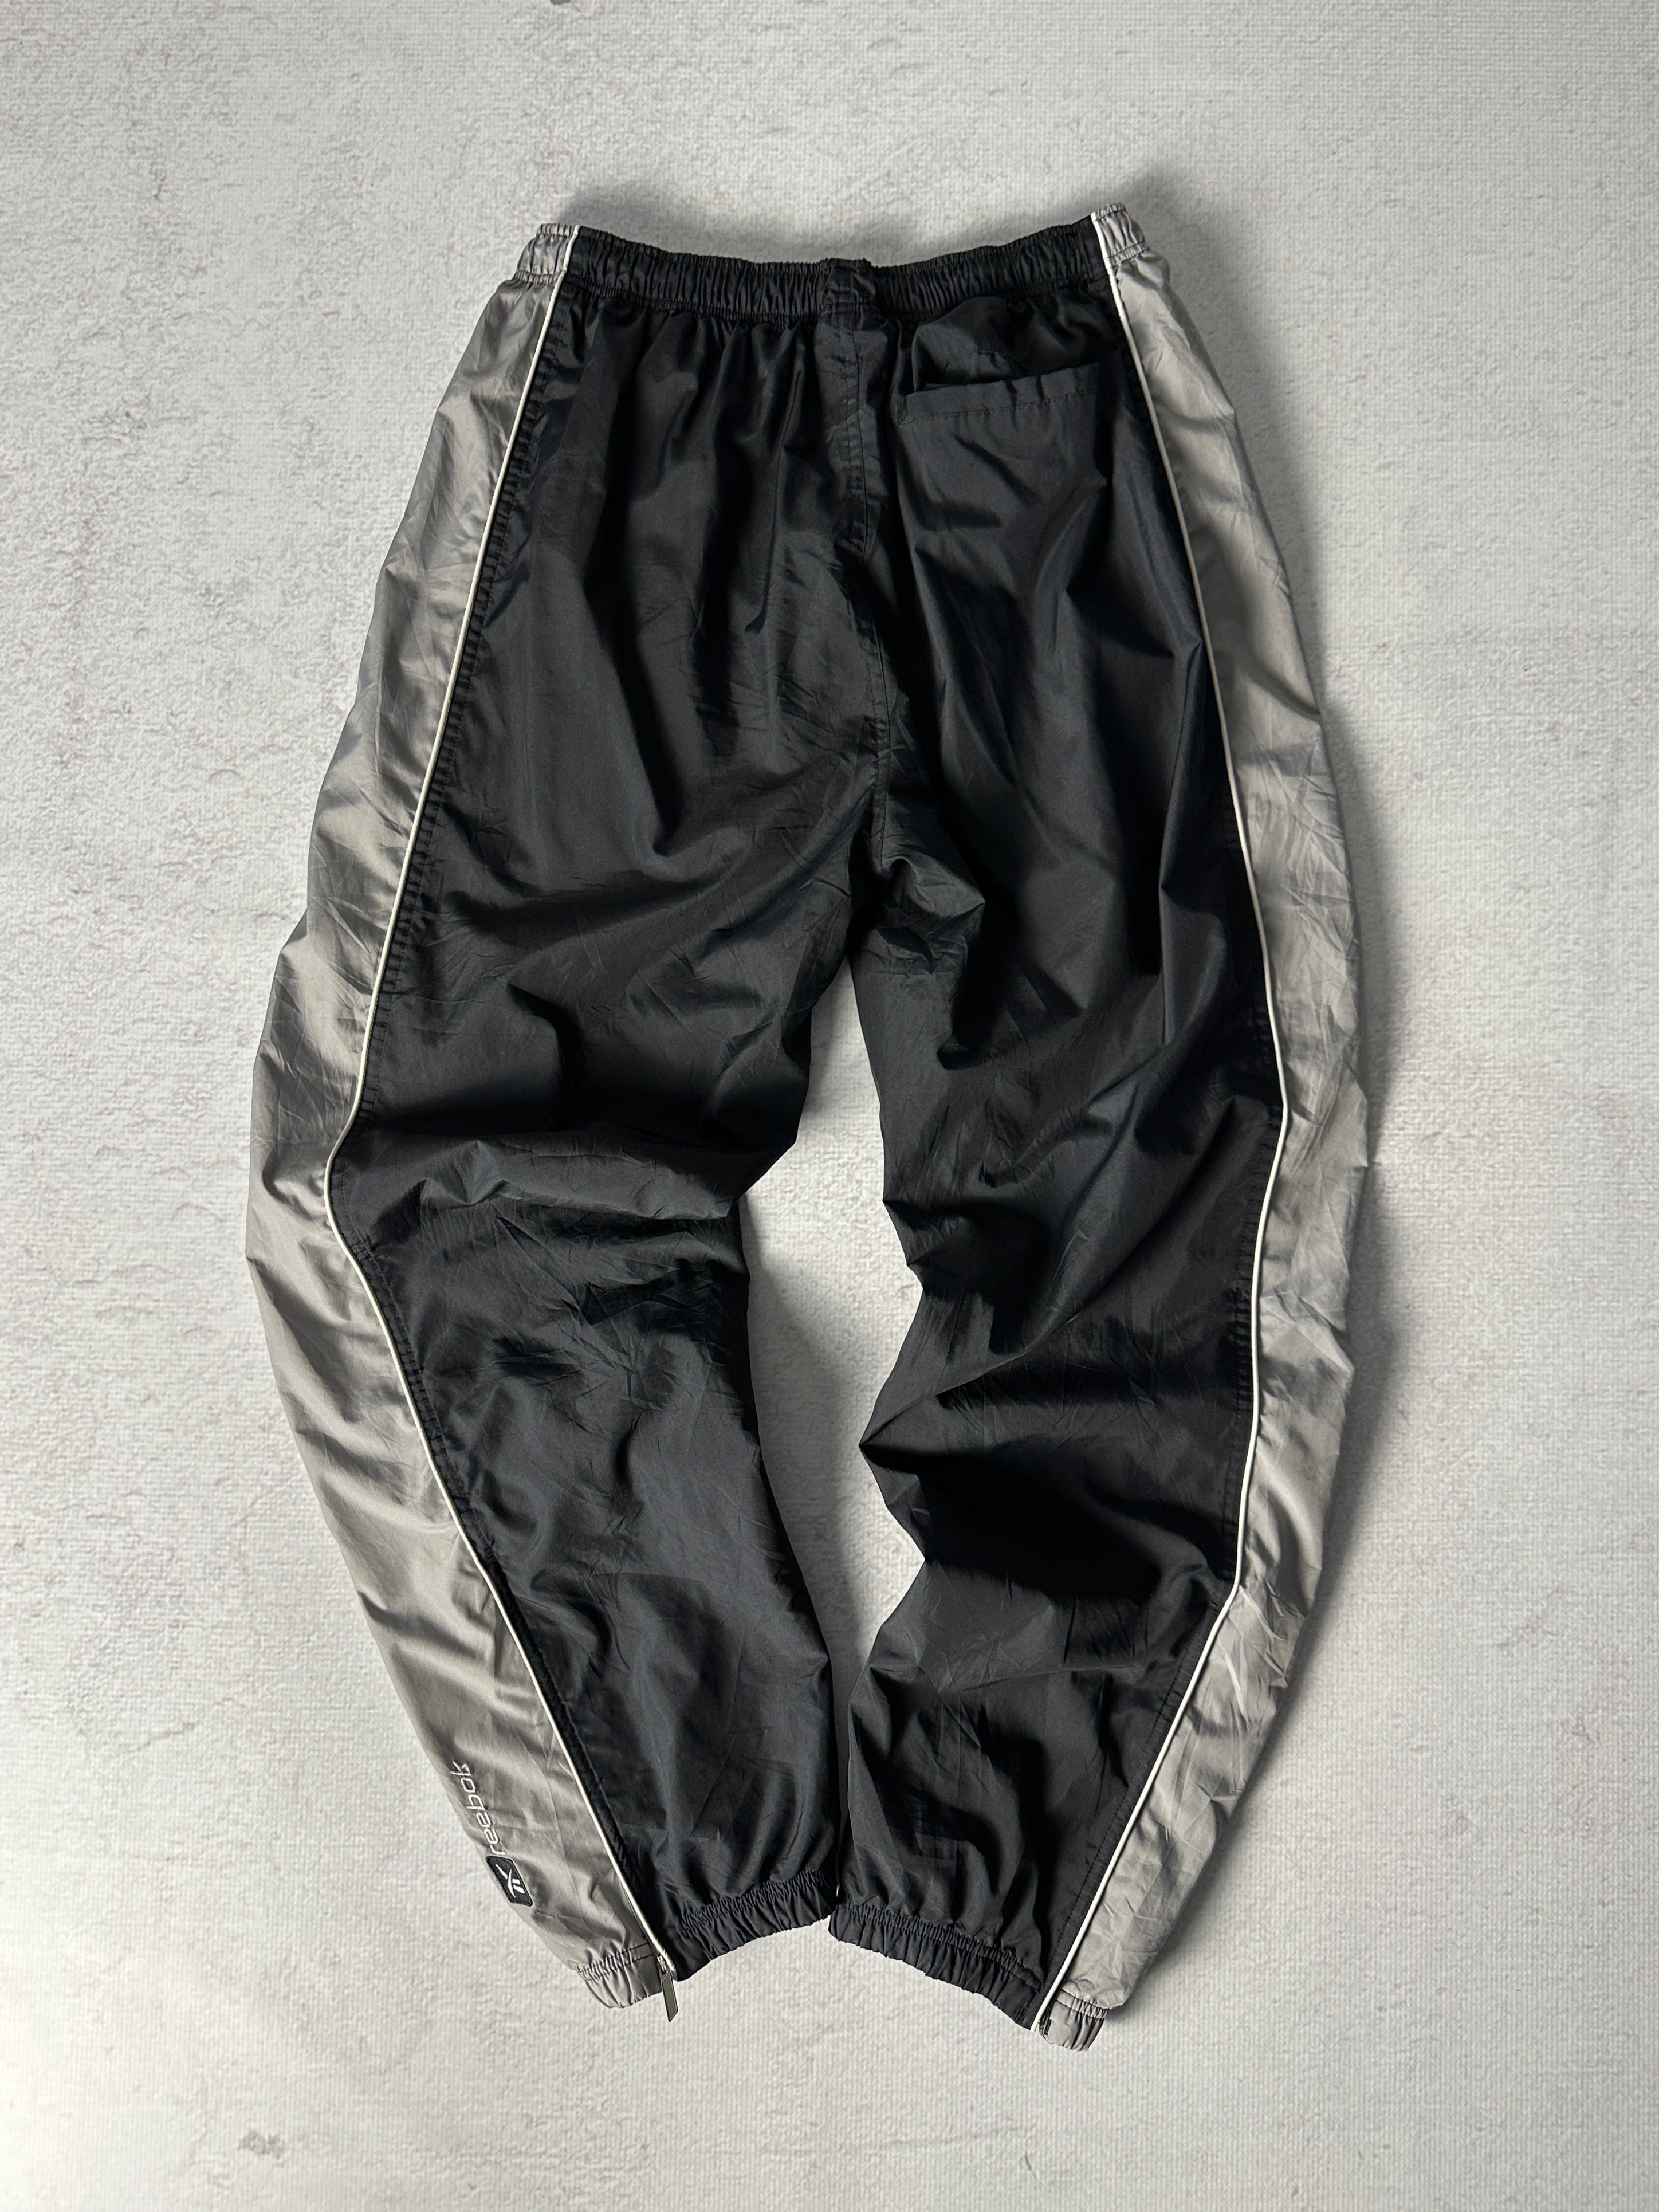 Vintage Reebok Cuffed Track Pants - Men's Large